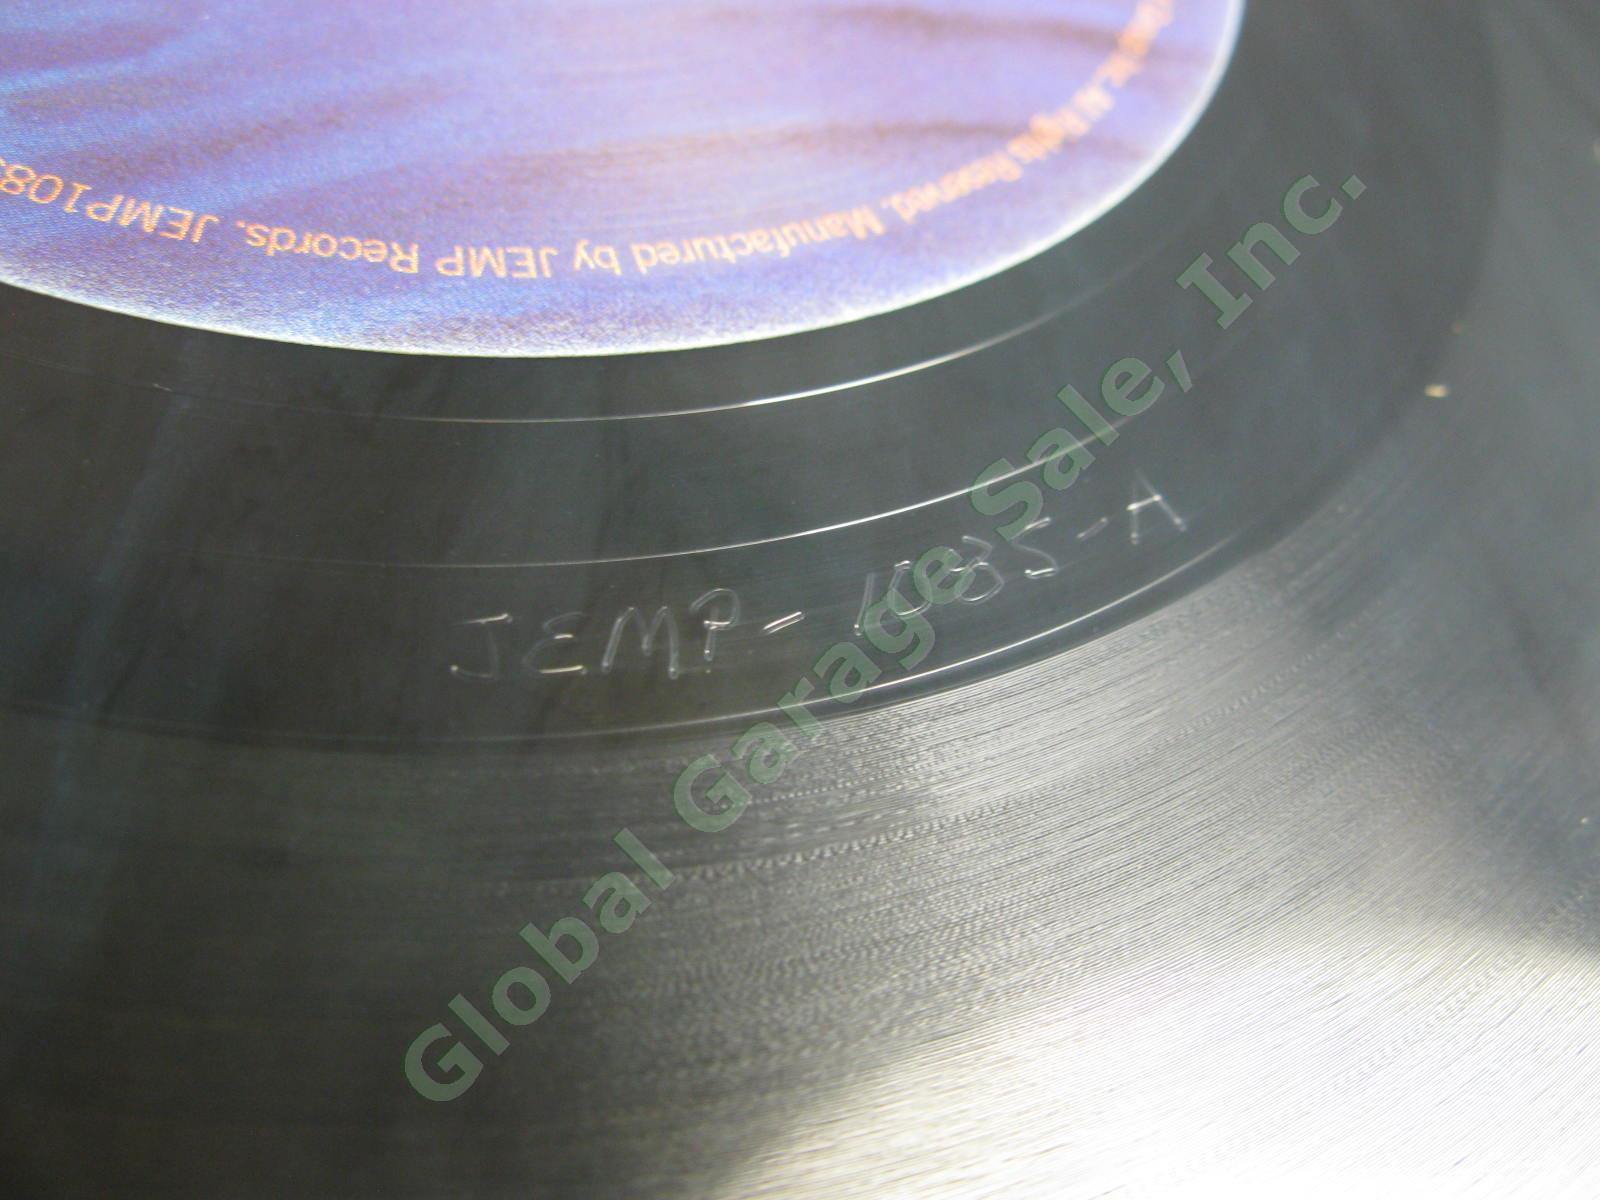 2015 PHISH Limited Edition Rift LP Record Album #8174 Welker Print Jemp1085 NR 7